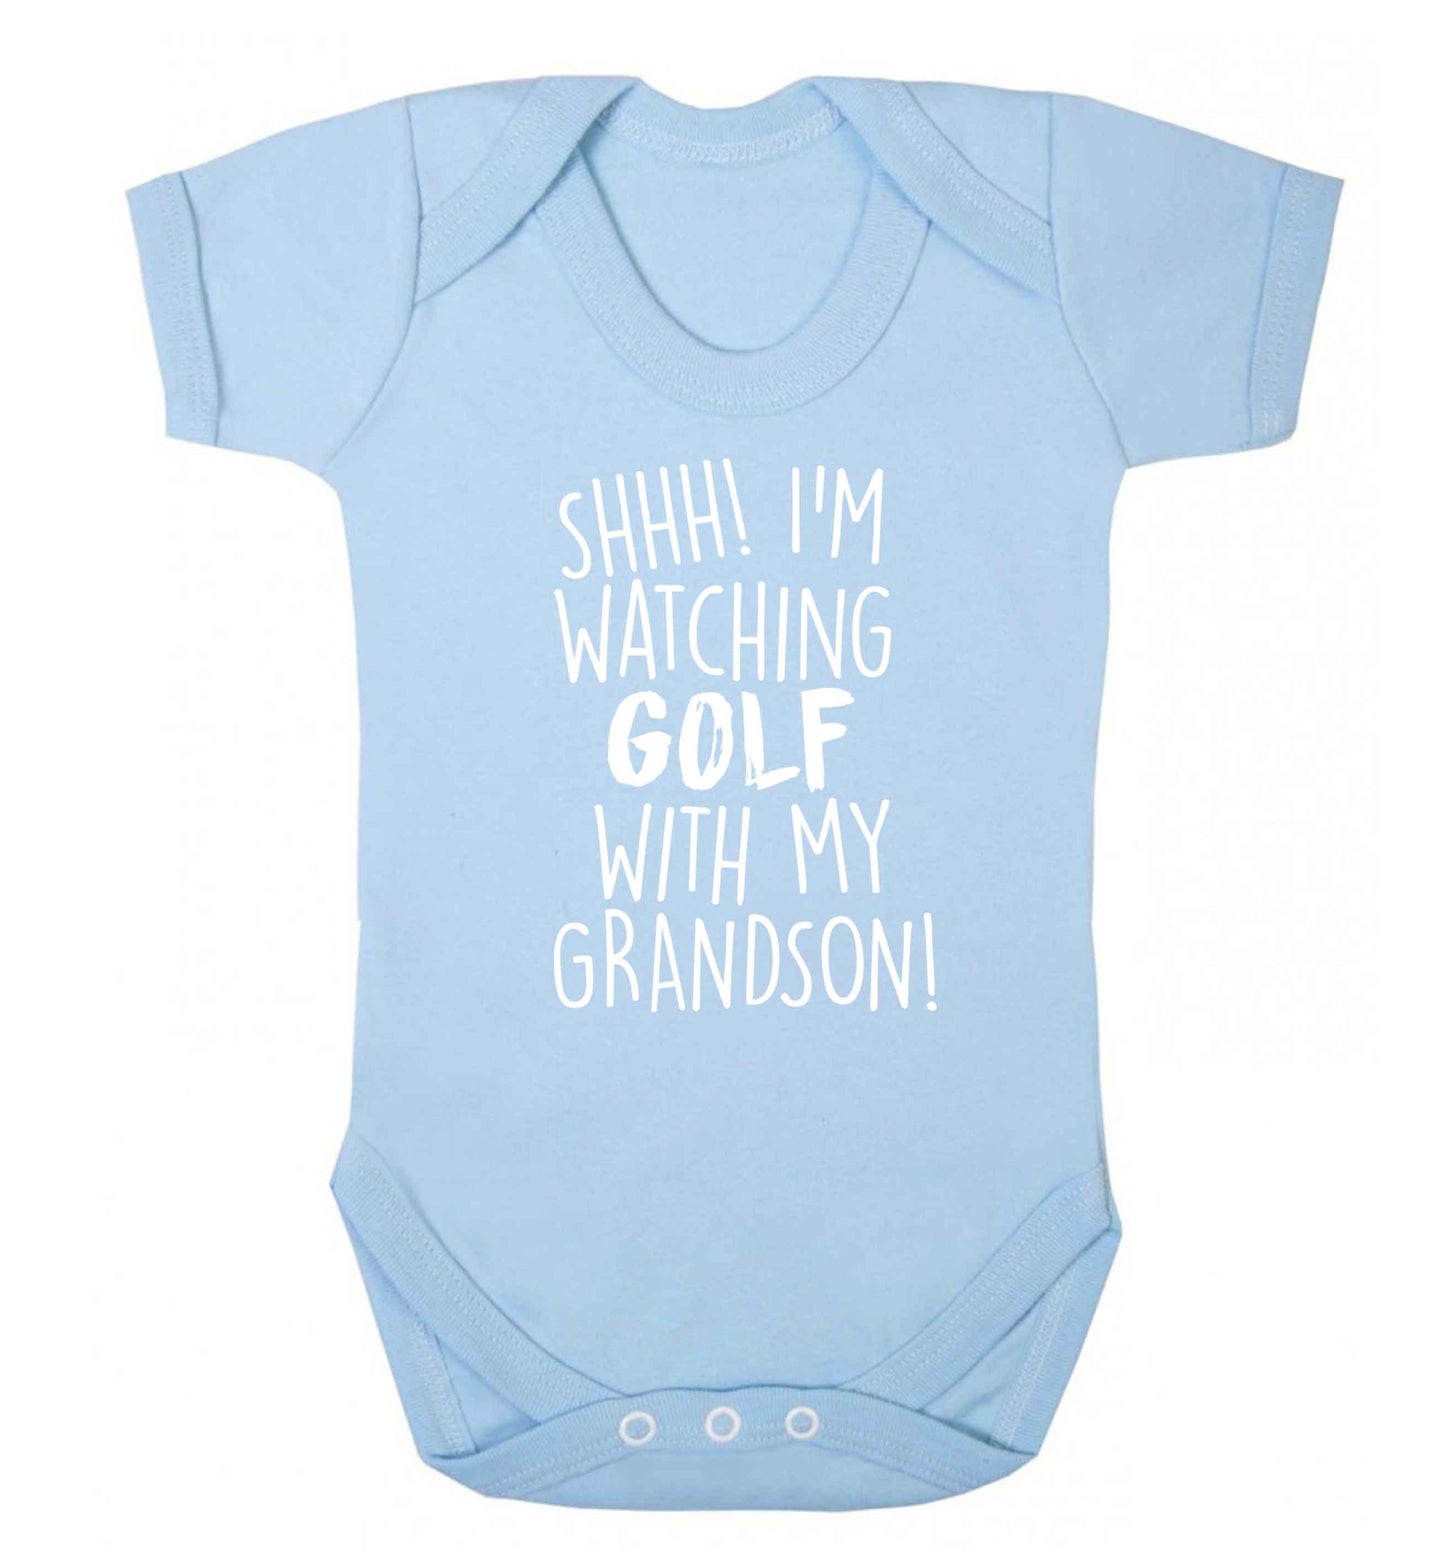 Shh I'm watching golf with my grandsonBaby Vest pale blue 18-24 months